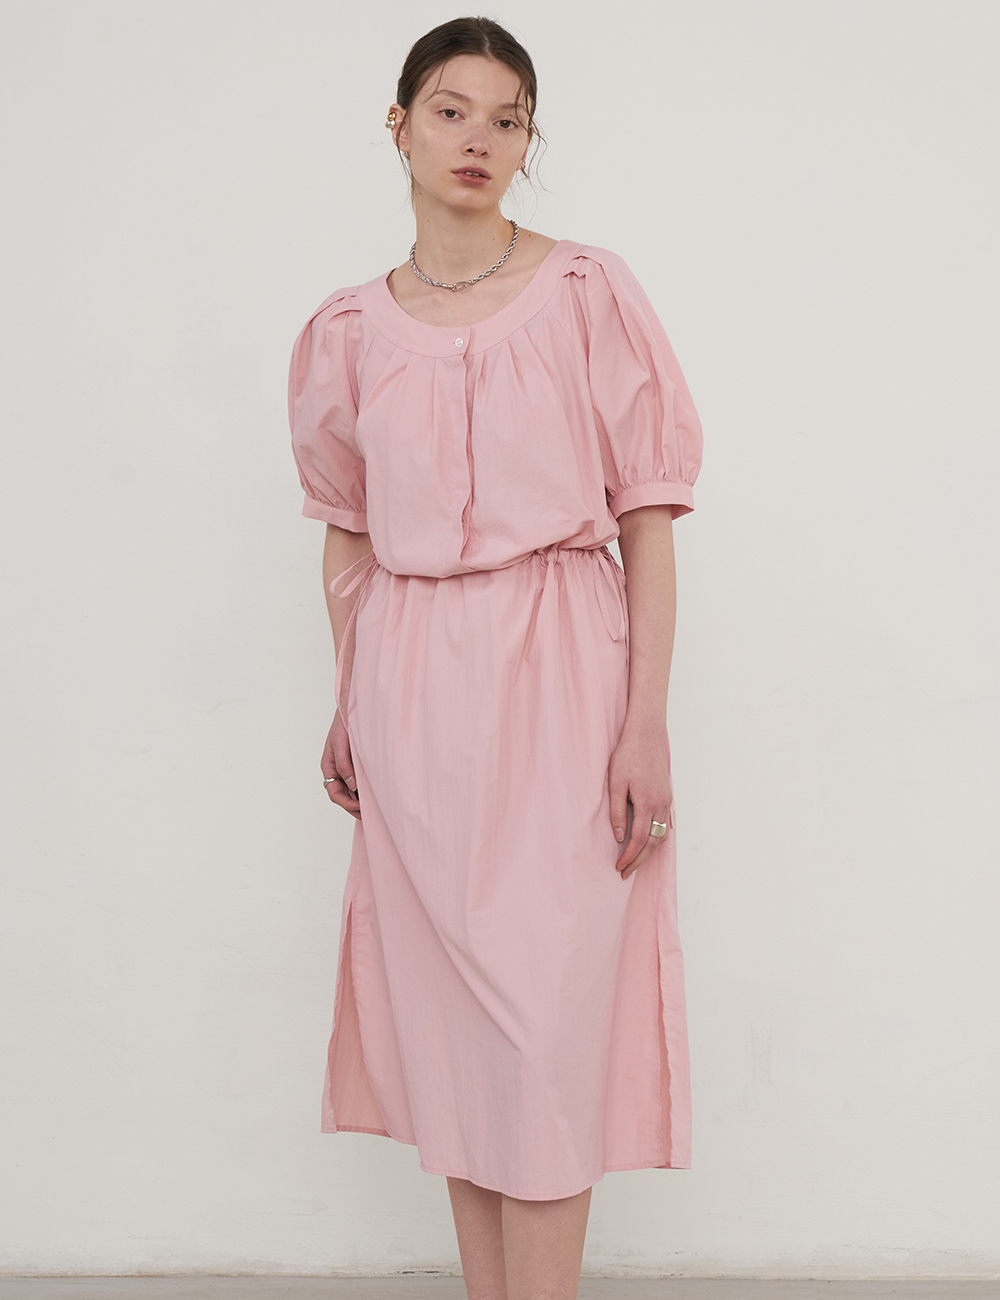 Suzy Volume String Dress (Blush Pink)